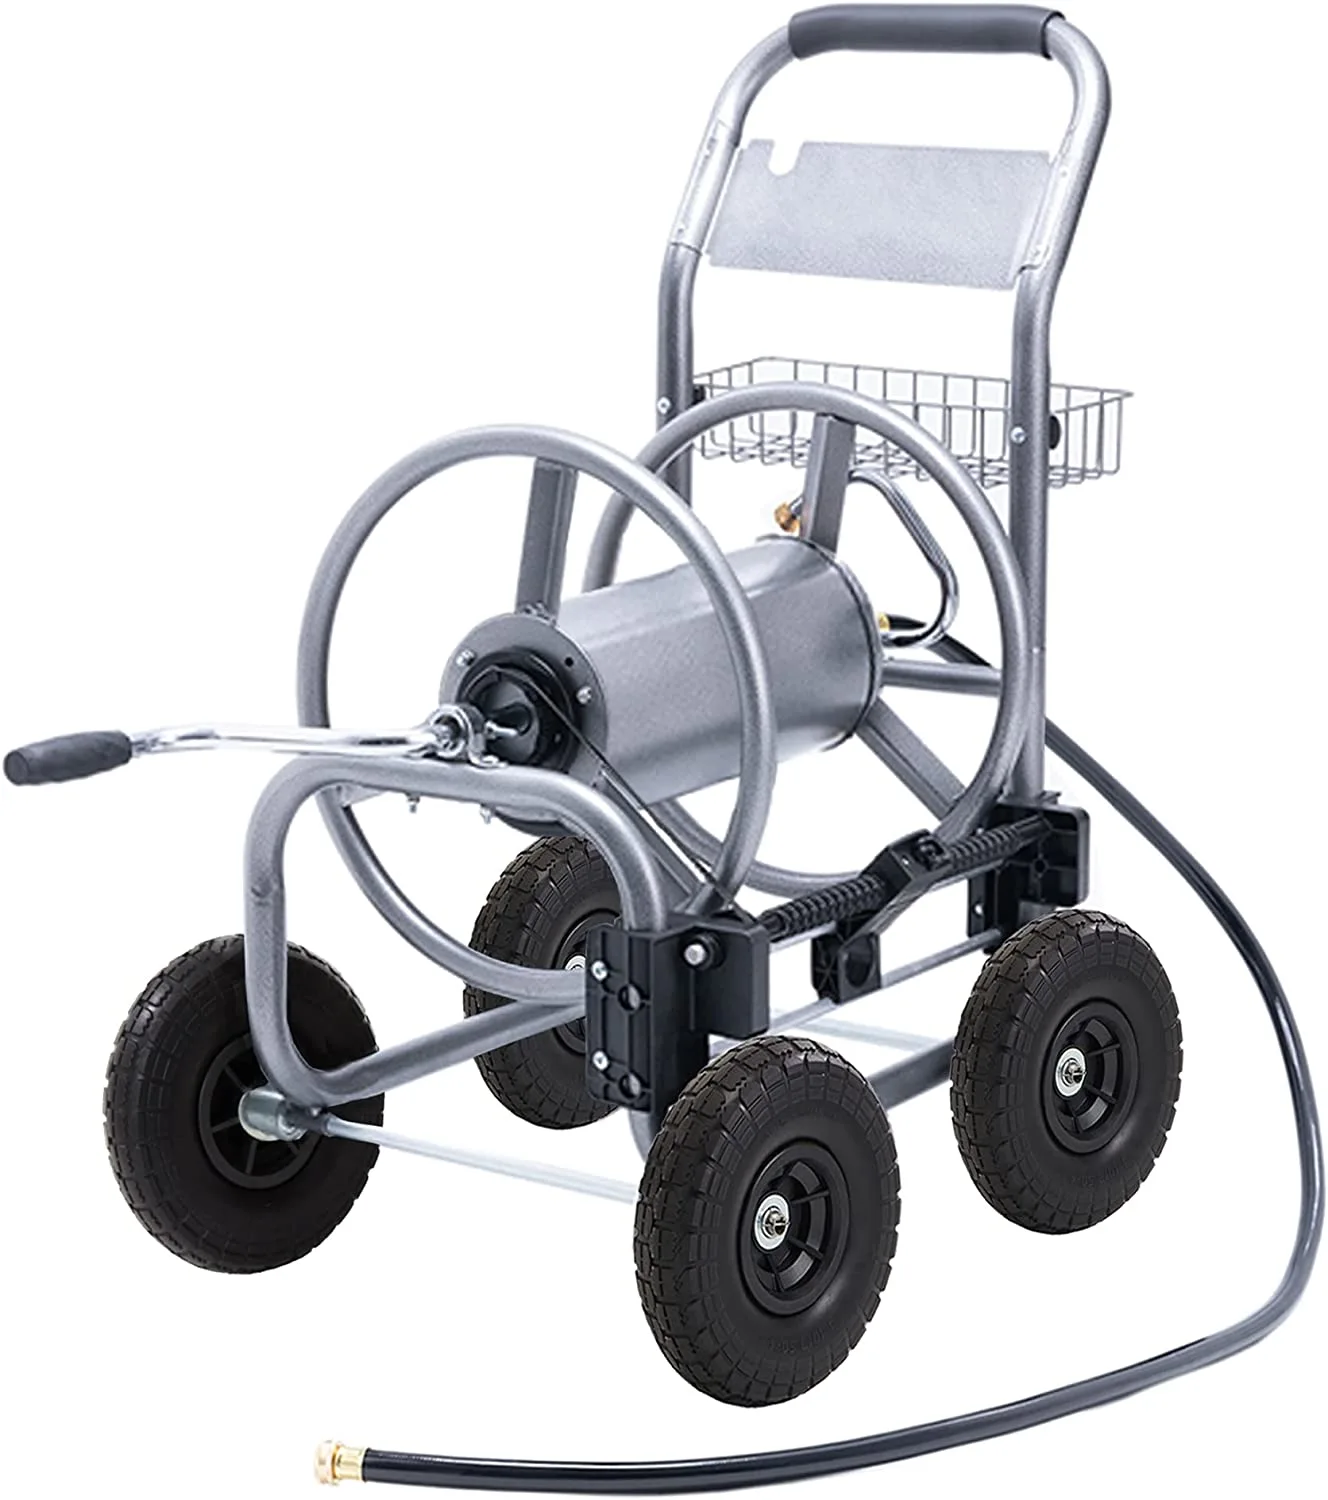 Hose Reel Cart, Hose Reel Cart with Wheels Heavy Duty, Industrial Hose Reels for Outside, 250-Feet of 5/8